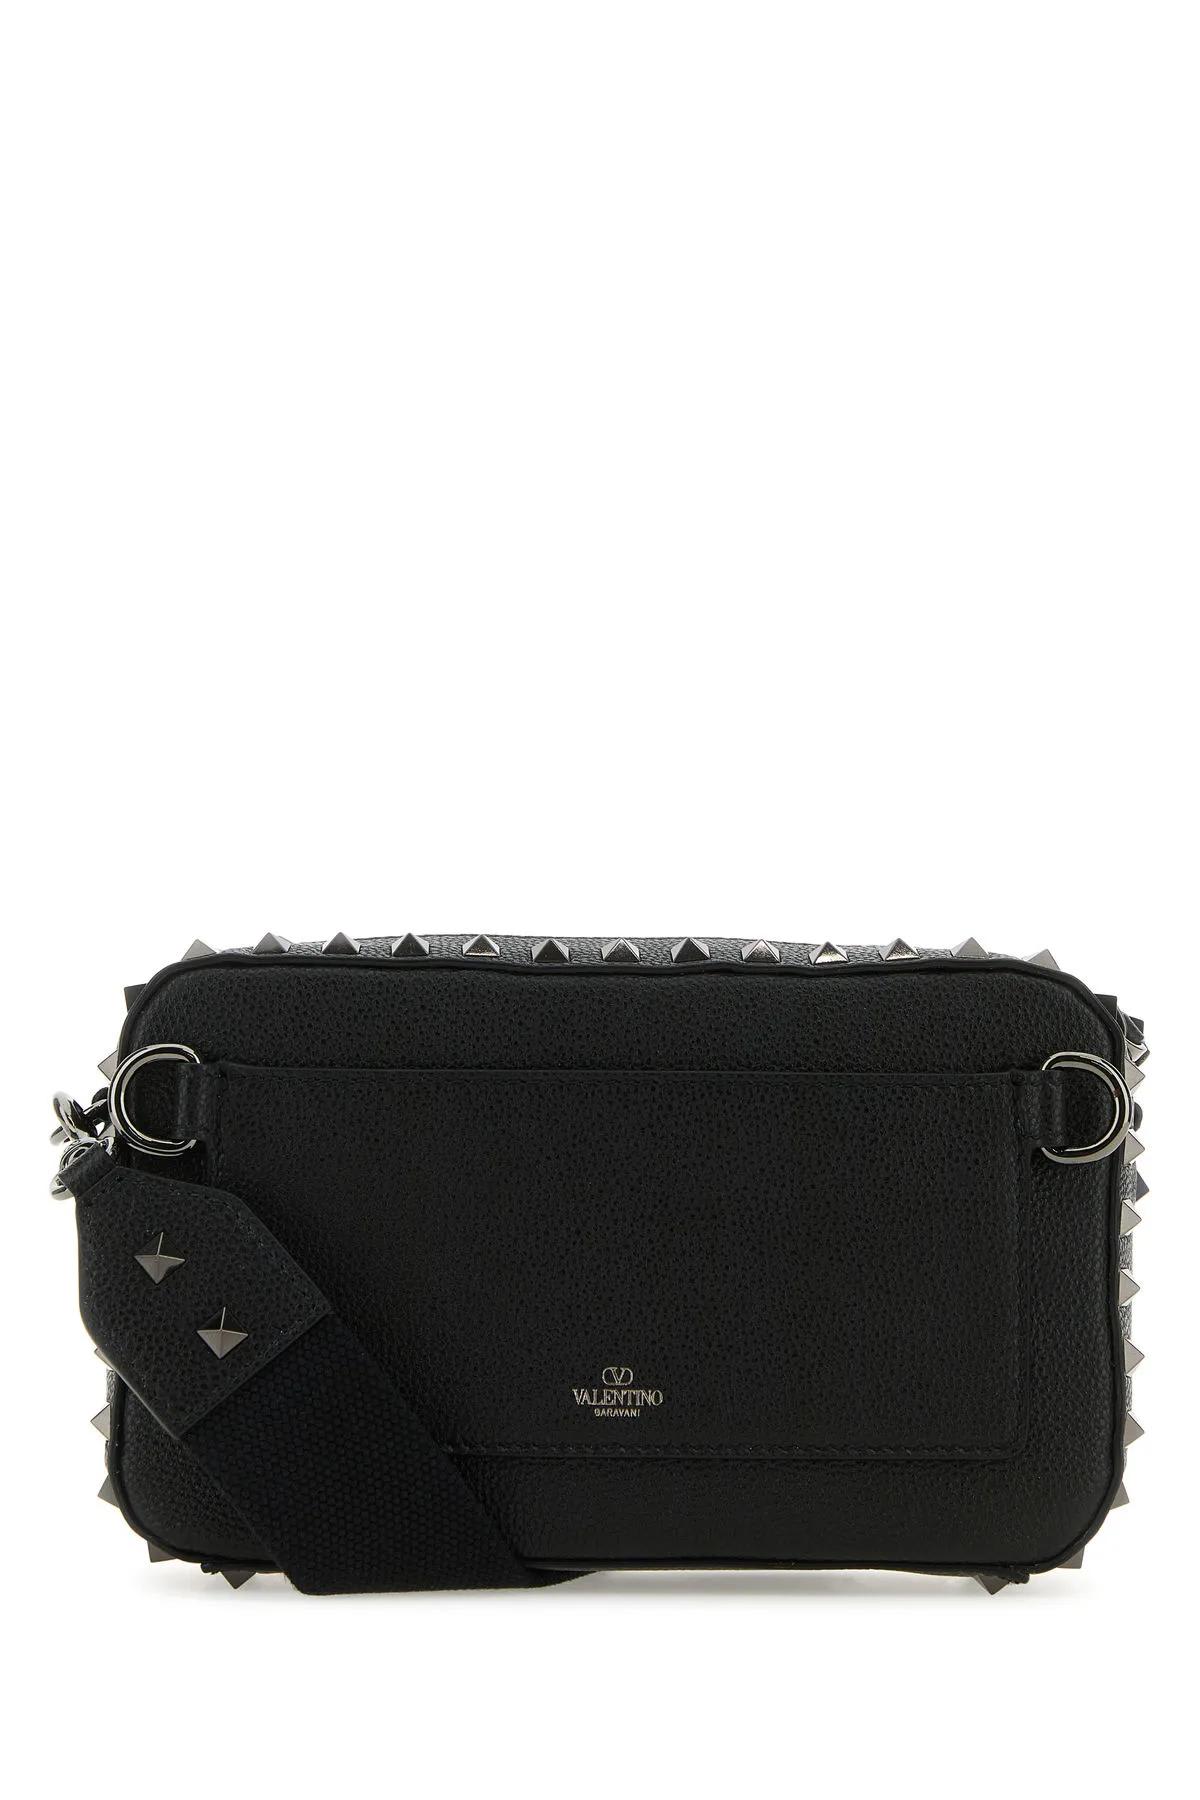 Shop Valentino Black Leather Rockstud Crossbody Bag